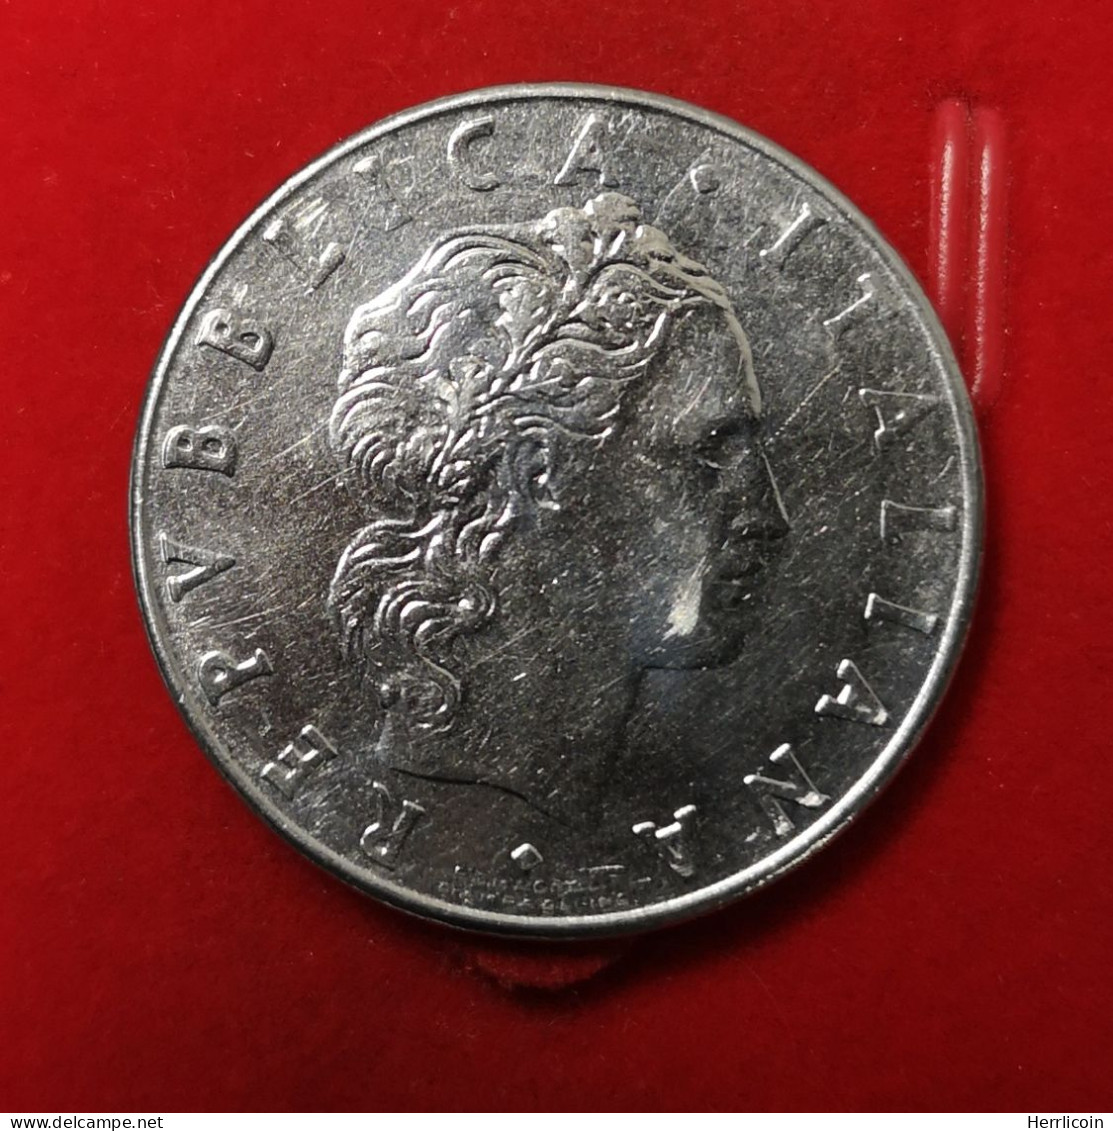 Monnaie Italie - 1977 - 50 Lire Grand Module - 50 Liras